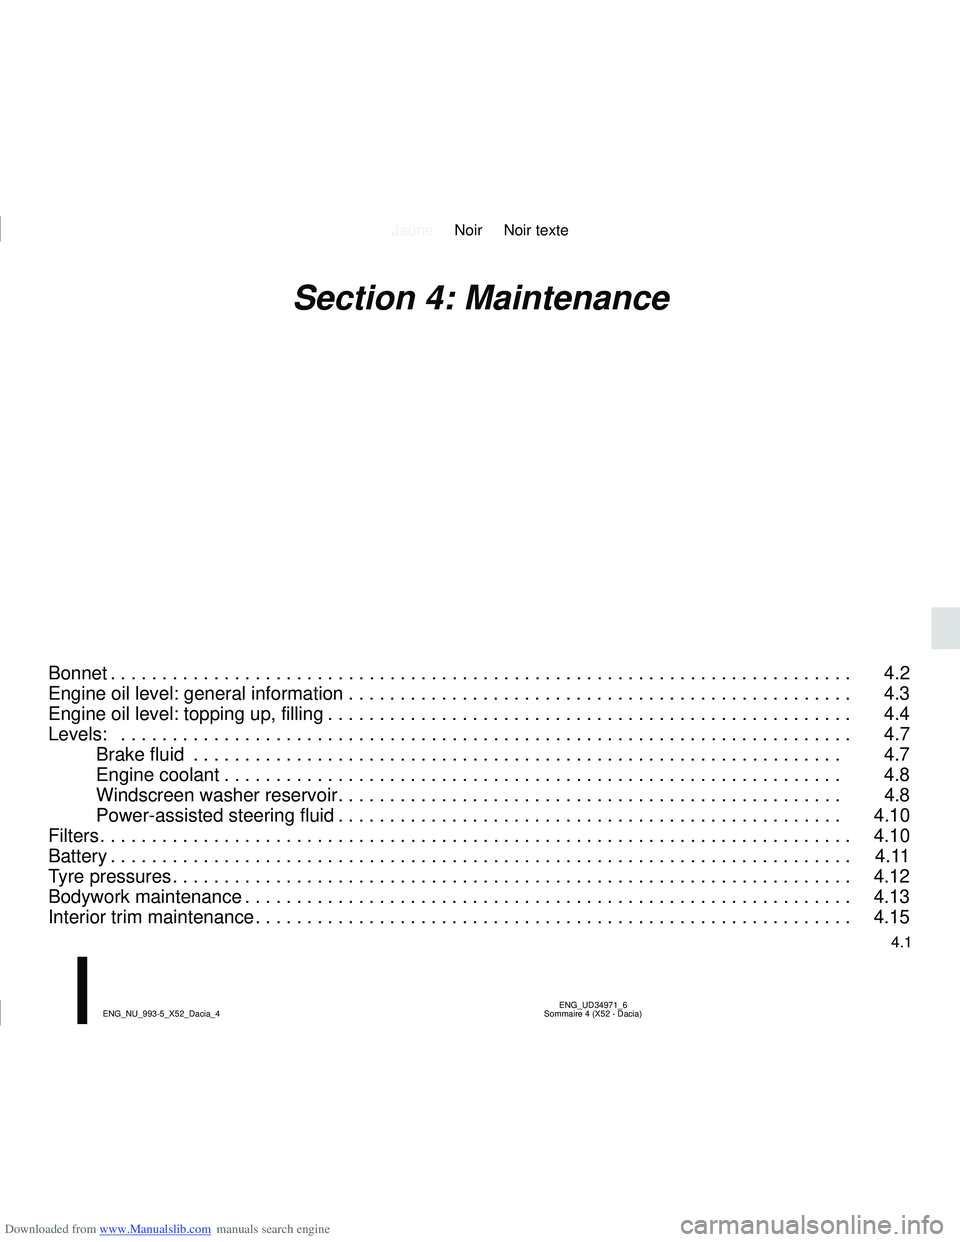 DACIA SANDERO 2021  Owners Manual Downloaded from www.Manualslib.com manuals search engine JauneNoir Noir texte
4.1
ENG_UD34971_6
Sommaire 4 (X52 - Dacia)
ENG_NU_993-5_X52_Dacia_4
Section 4: Maintenance
Bonnet . . . . . . . . . . . . 